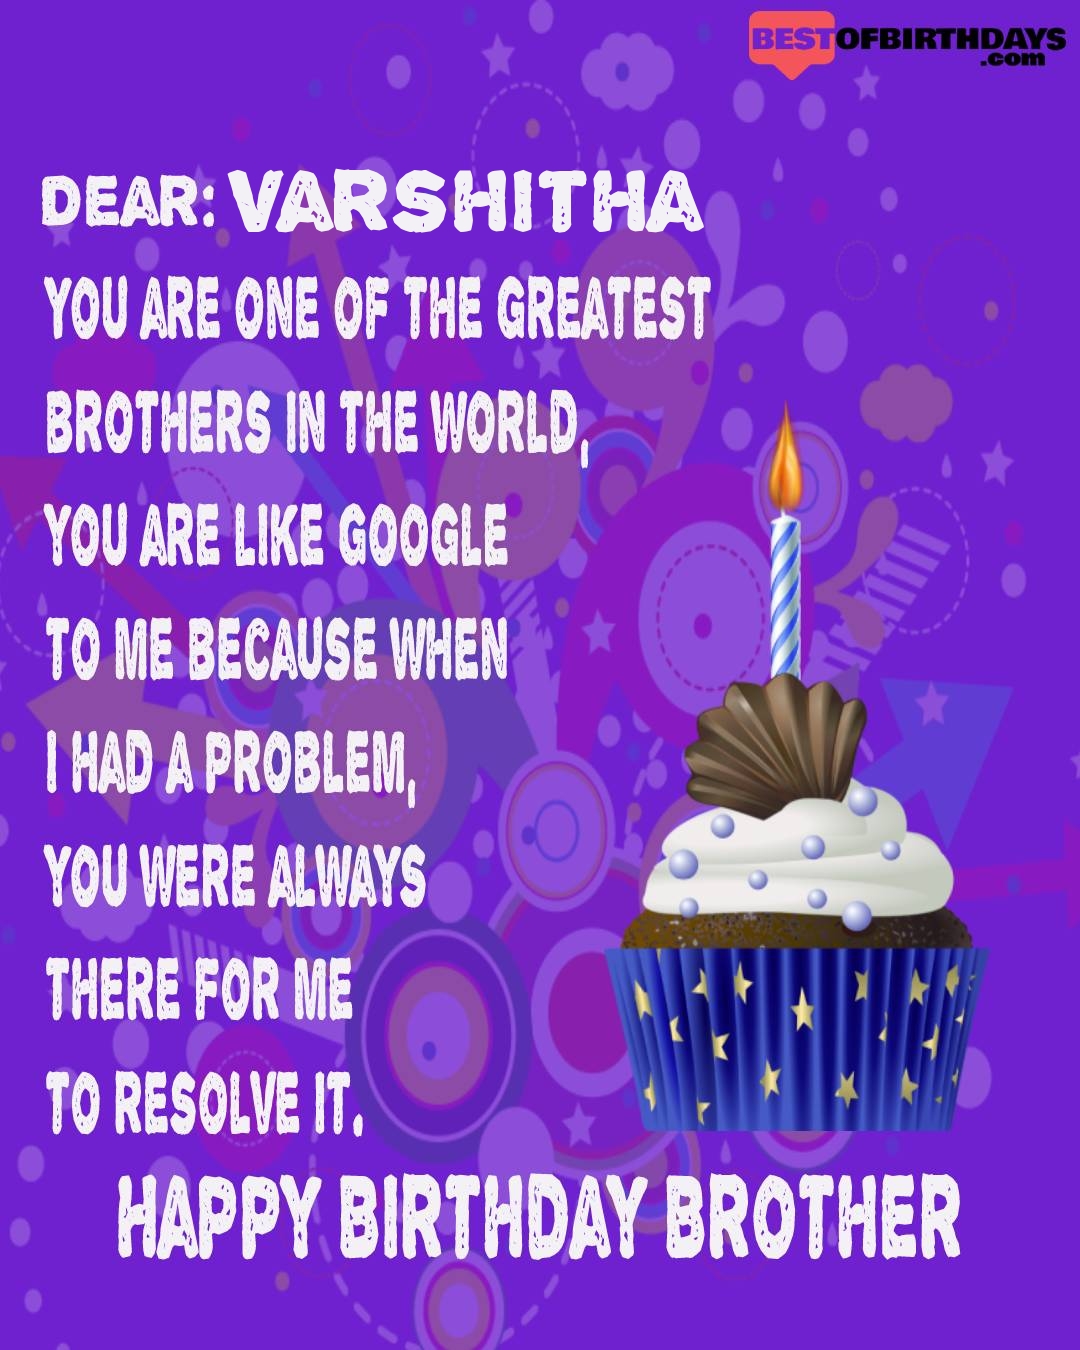 Happy birthday varshitha bhai brother bro